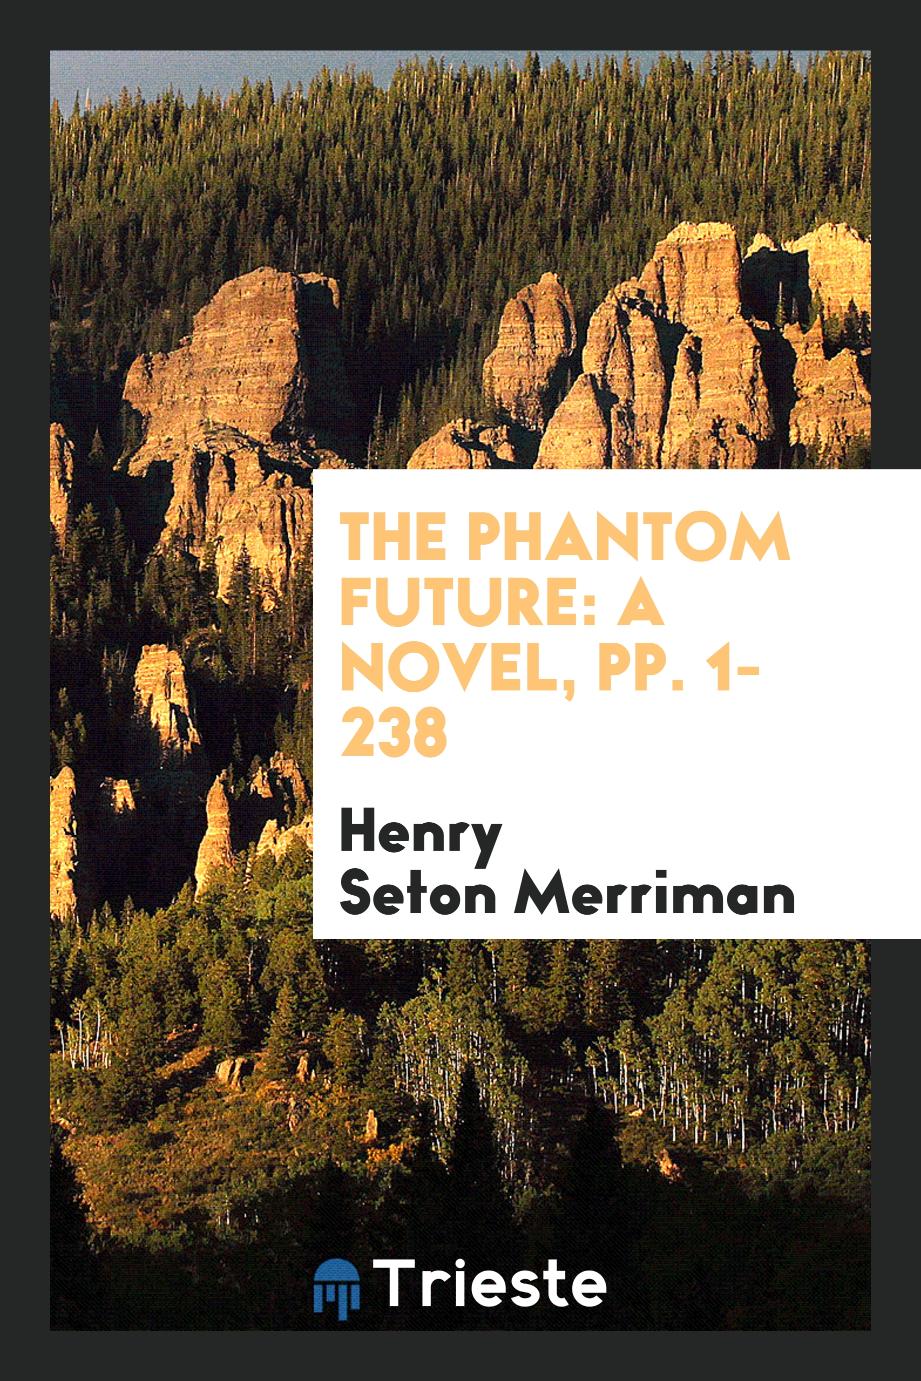 The Phantom Future: A Novel, pp. 1-238